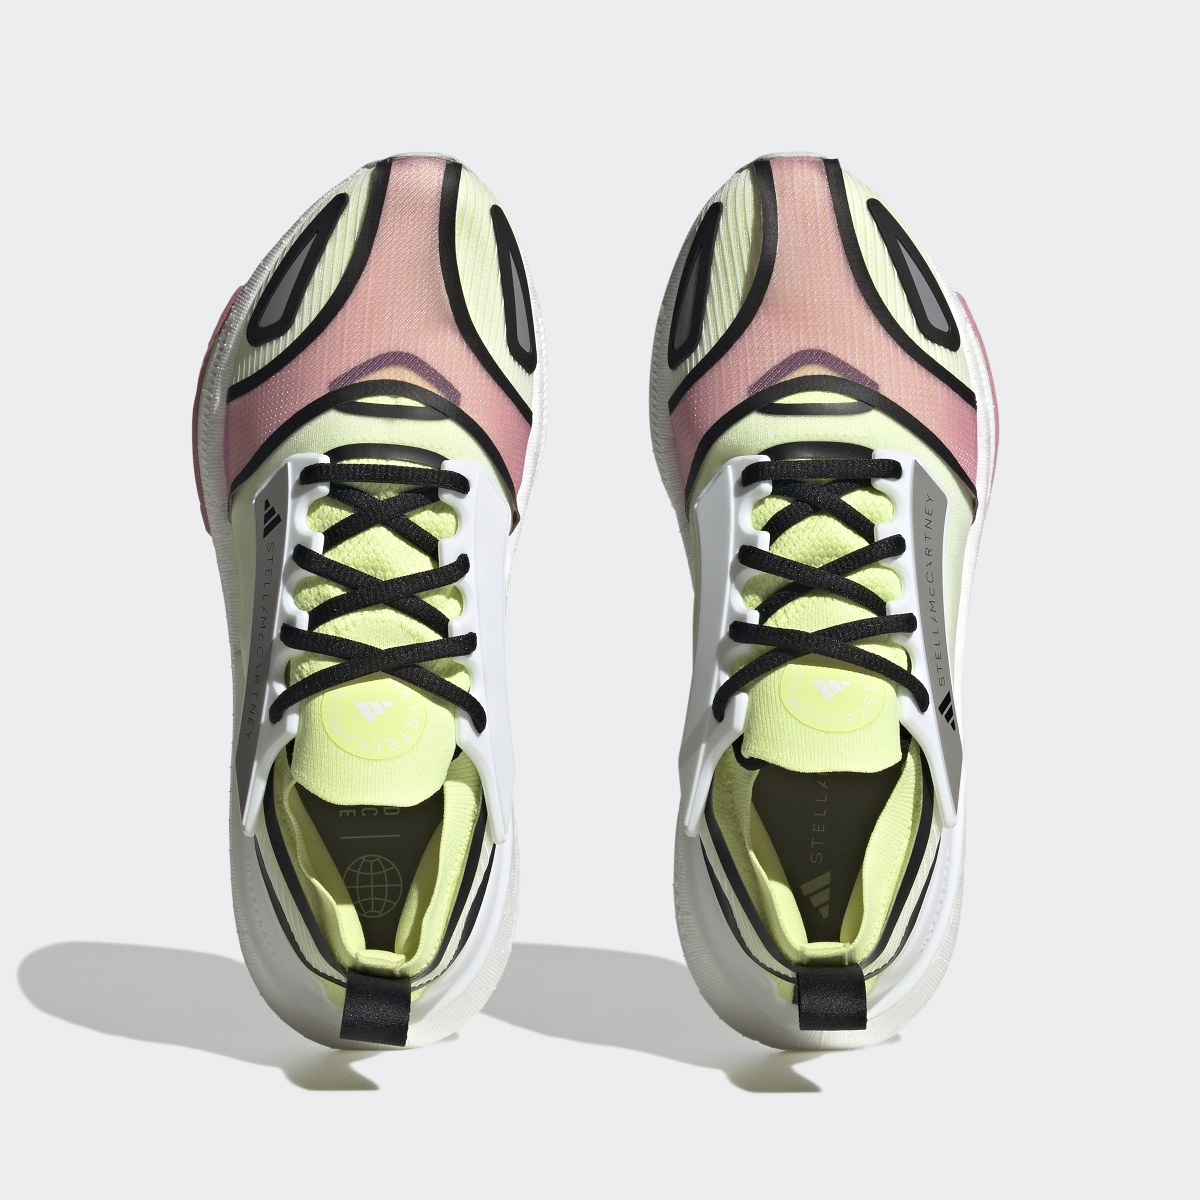 Adidas by Stella McCartney Ultraboost Light Shoes. 6